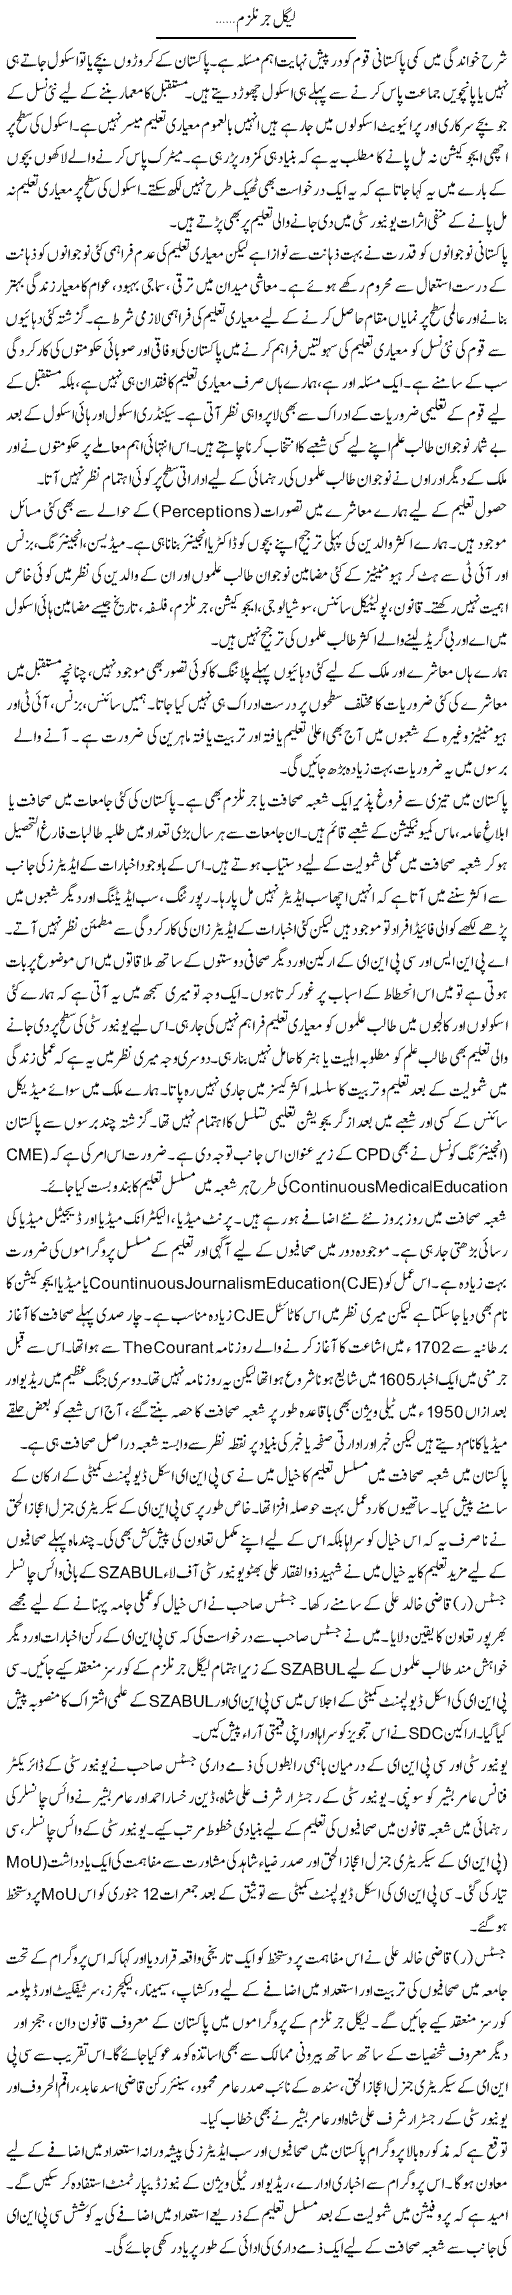 Legal Journalism | Dr. Waqar Yousuf Azeemi | Daily Urdu Columns